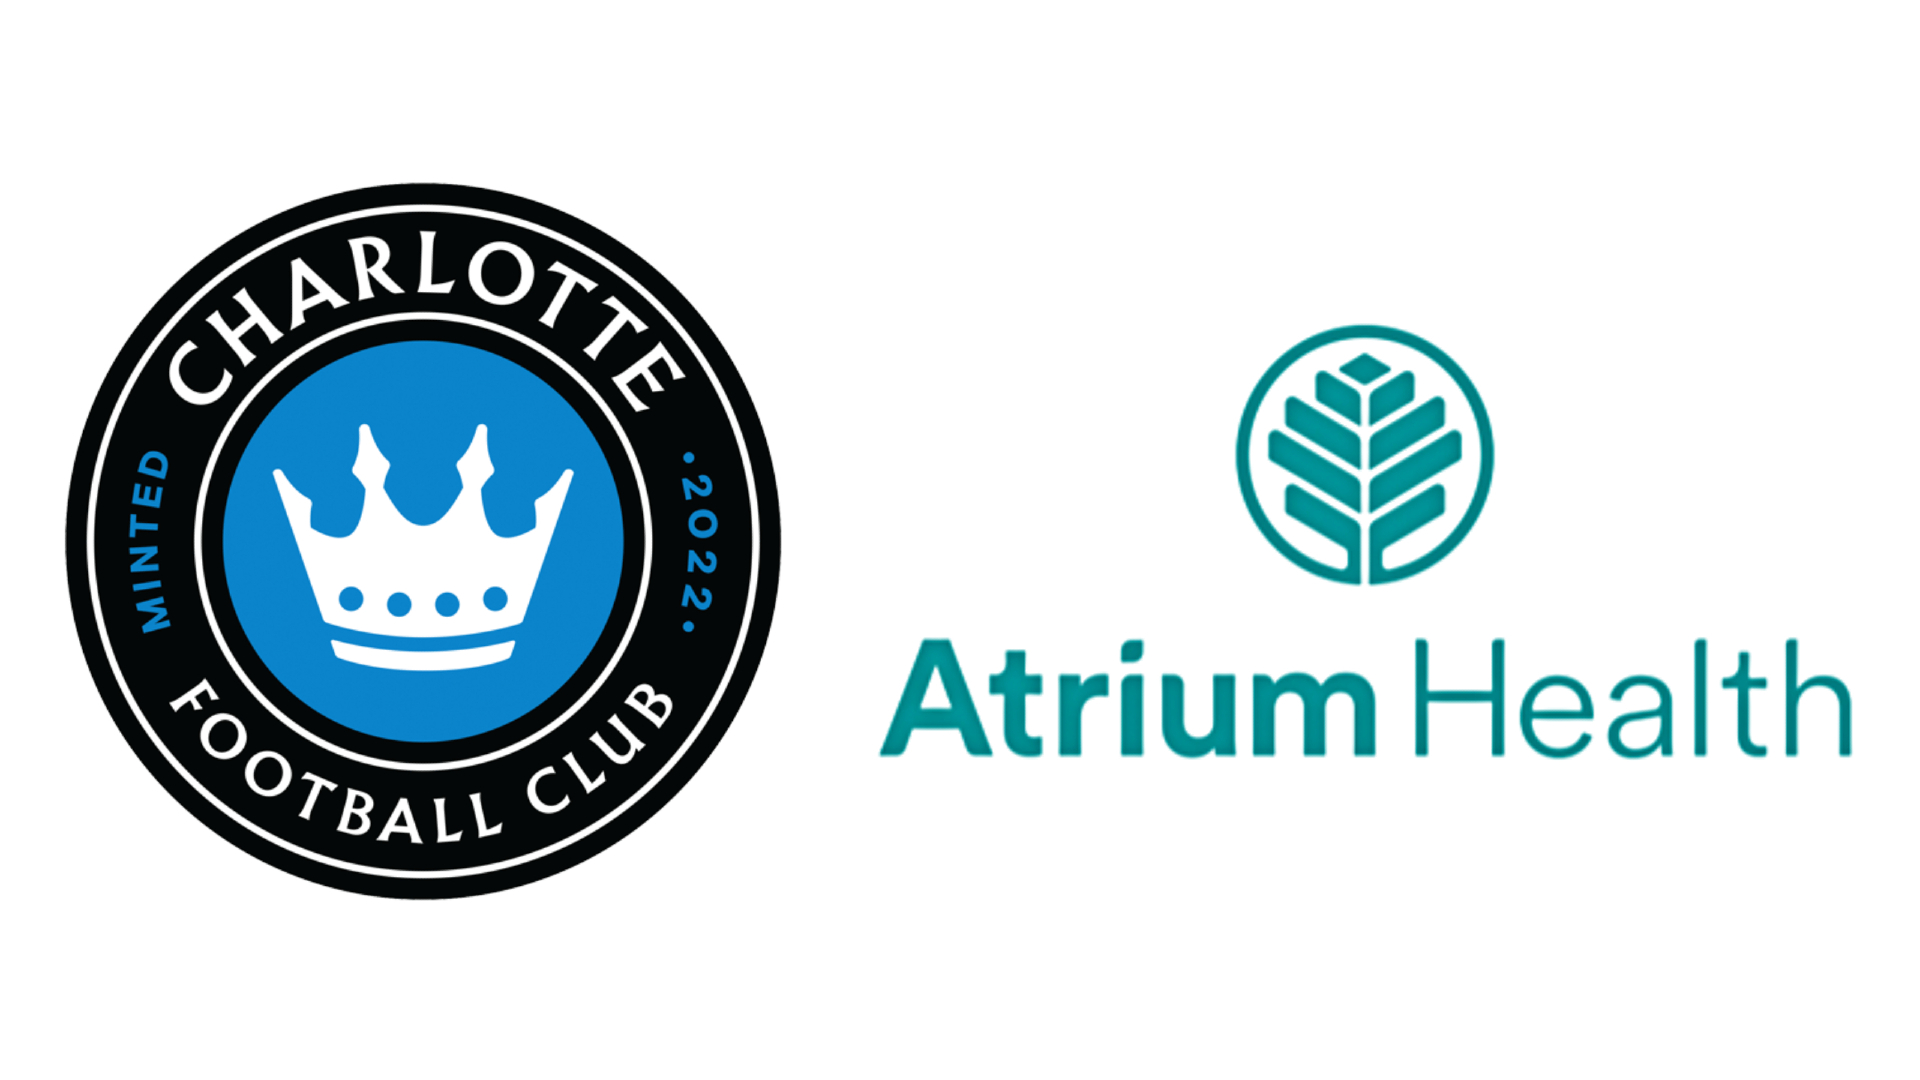 Charlotte FC and Atrium Health logos